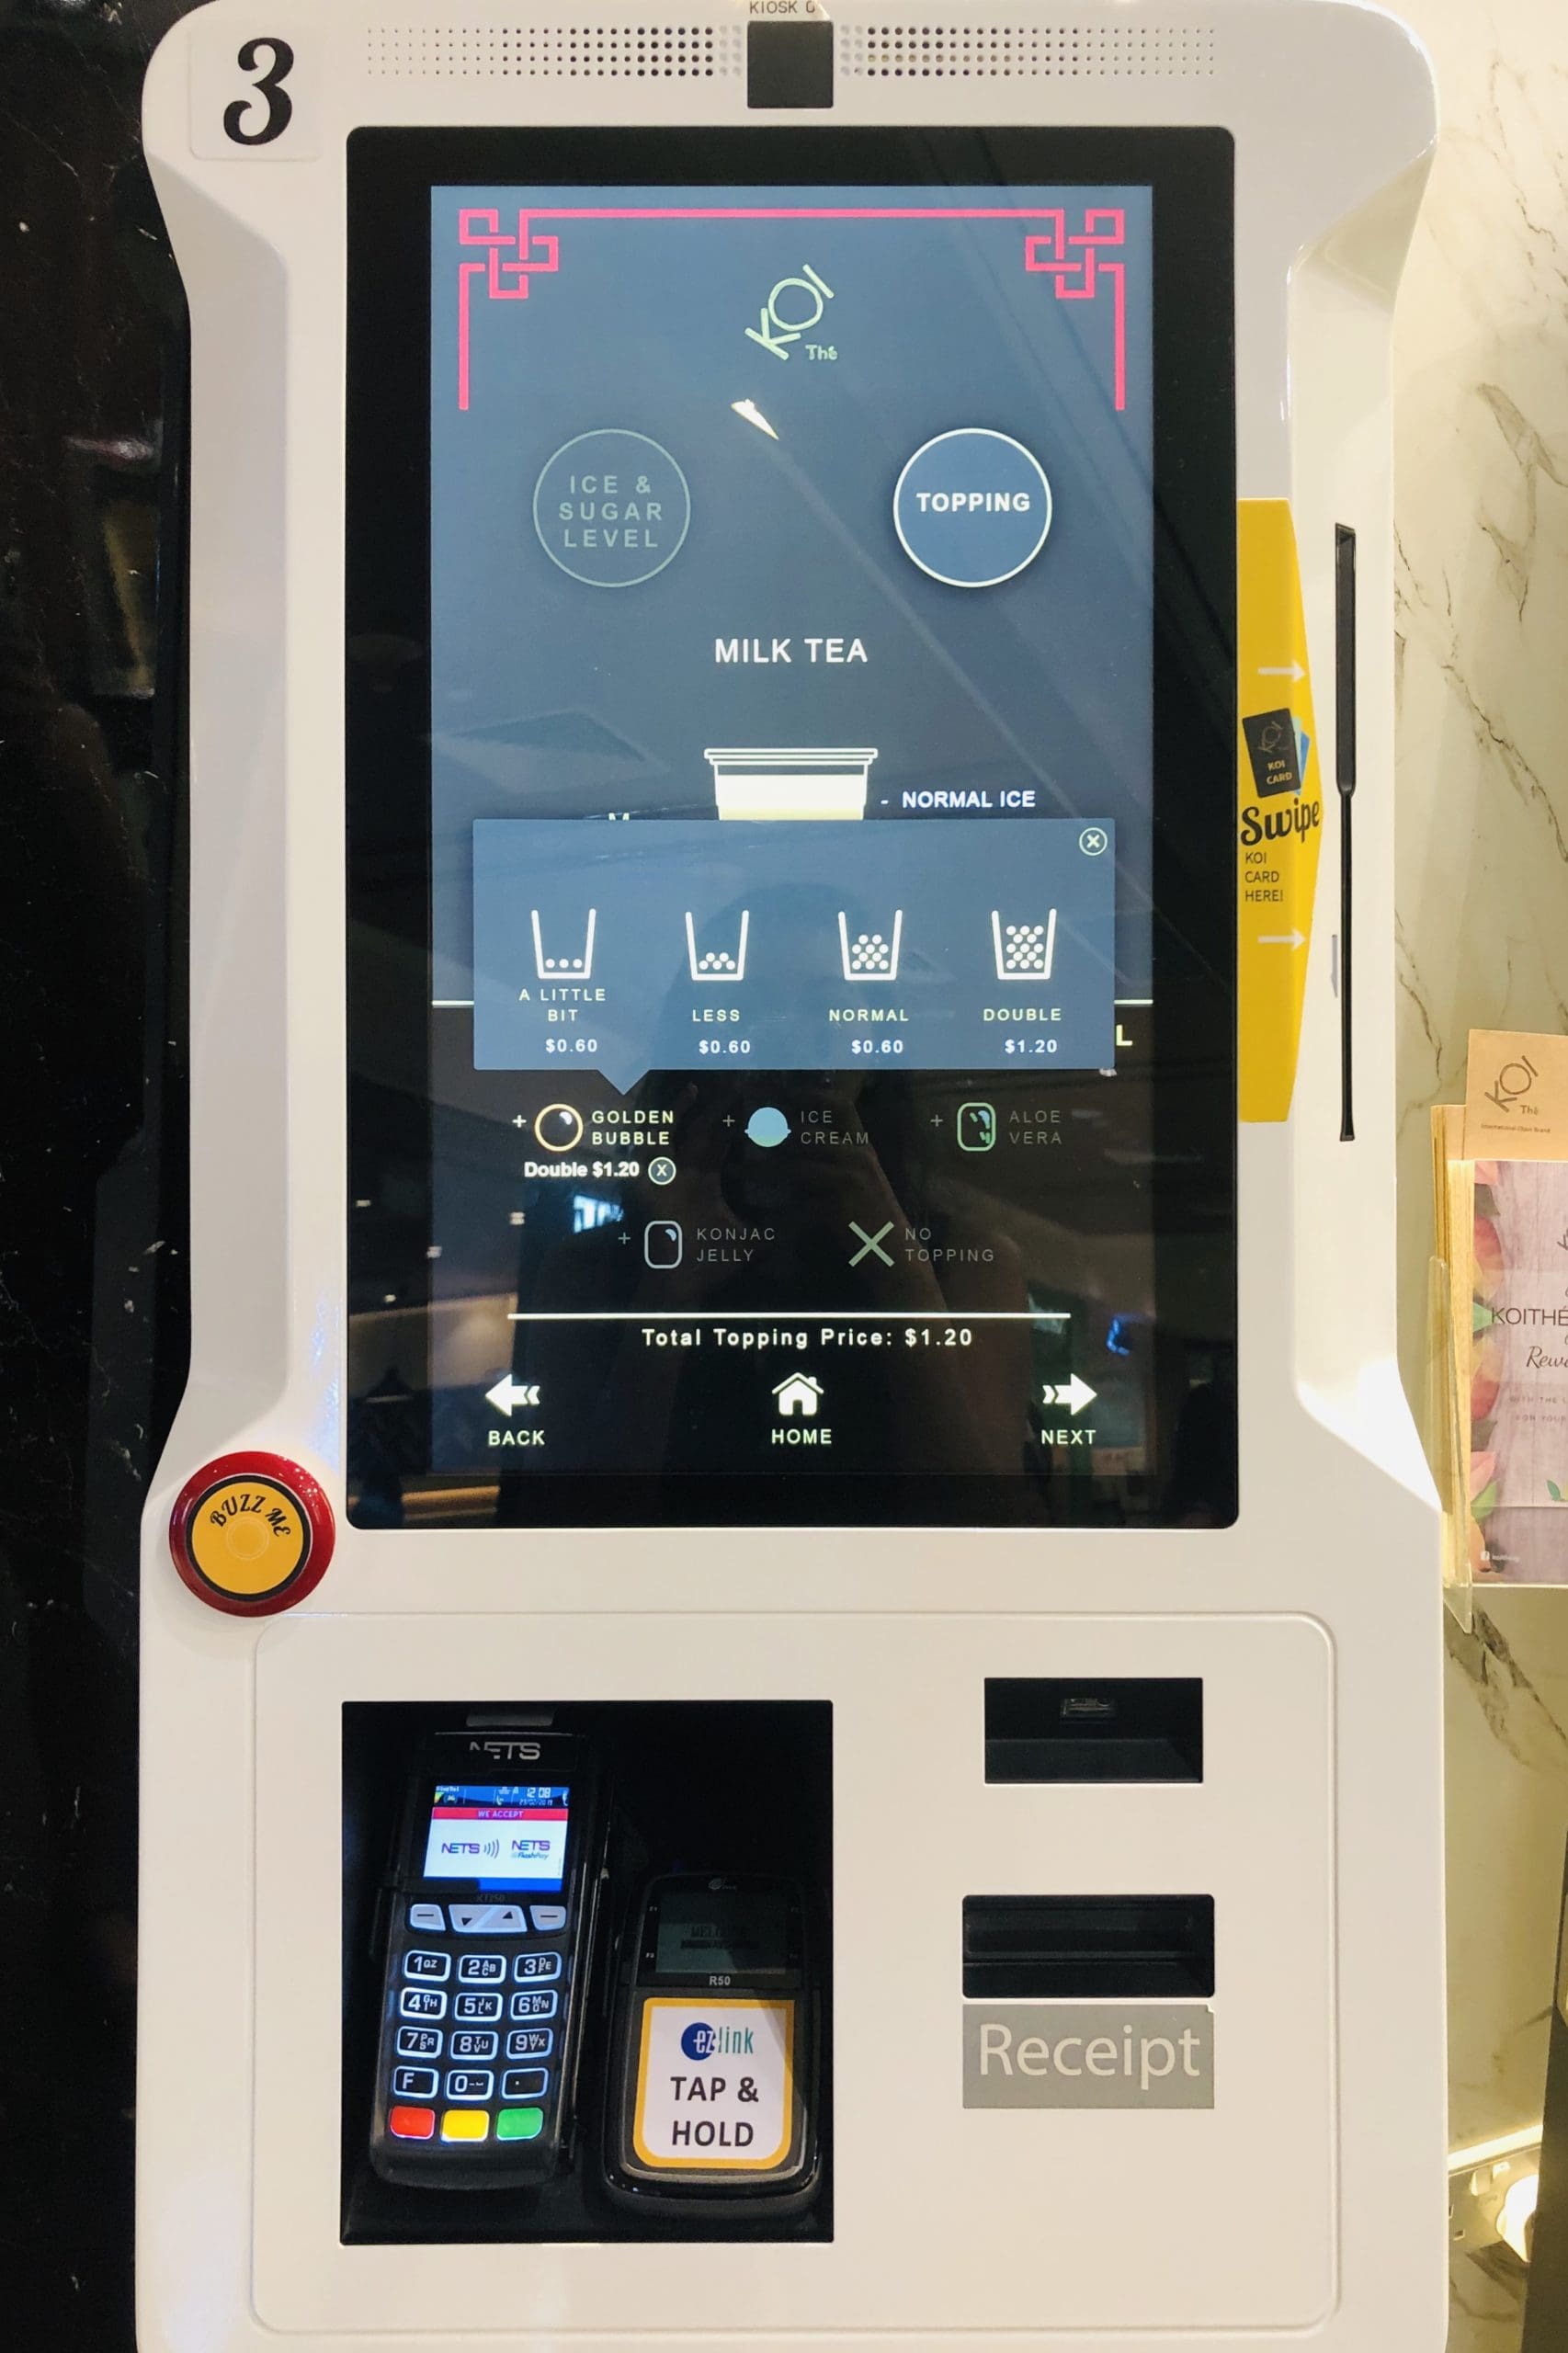 KOI Vending Machine Singapore